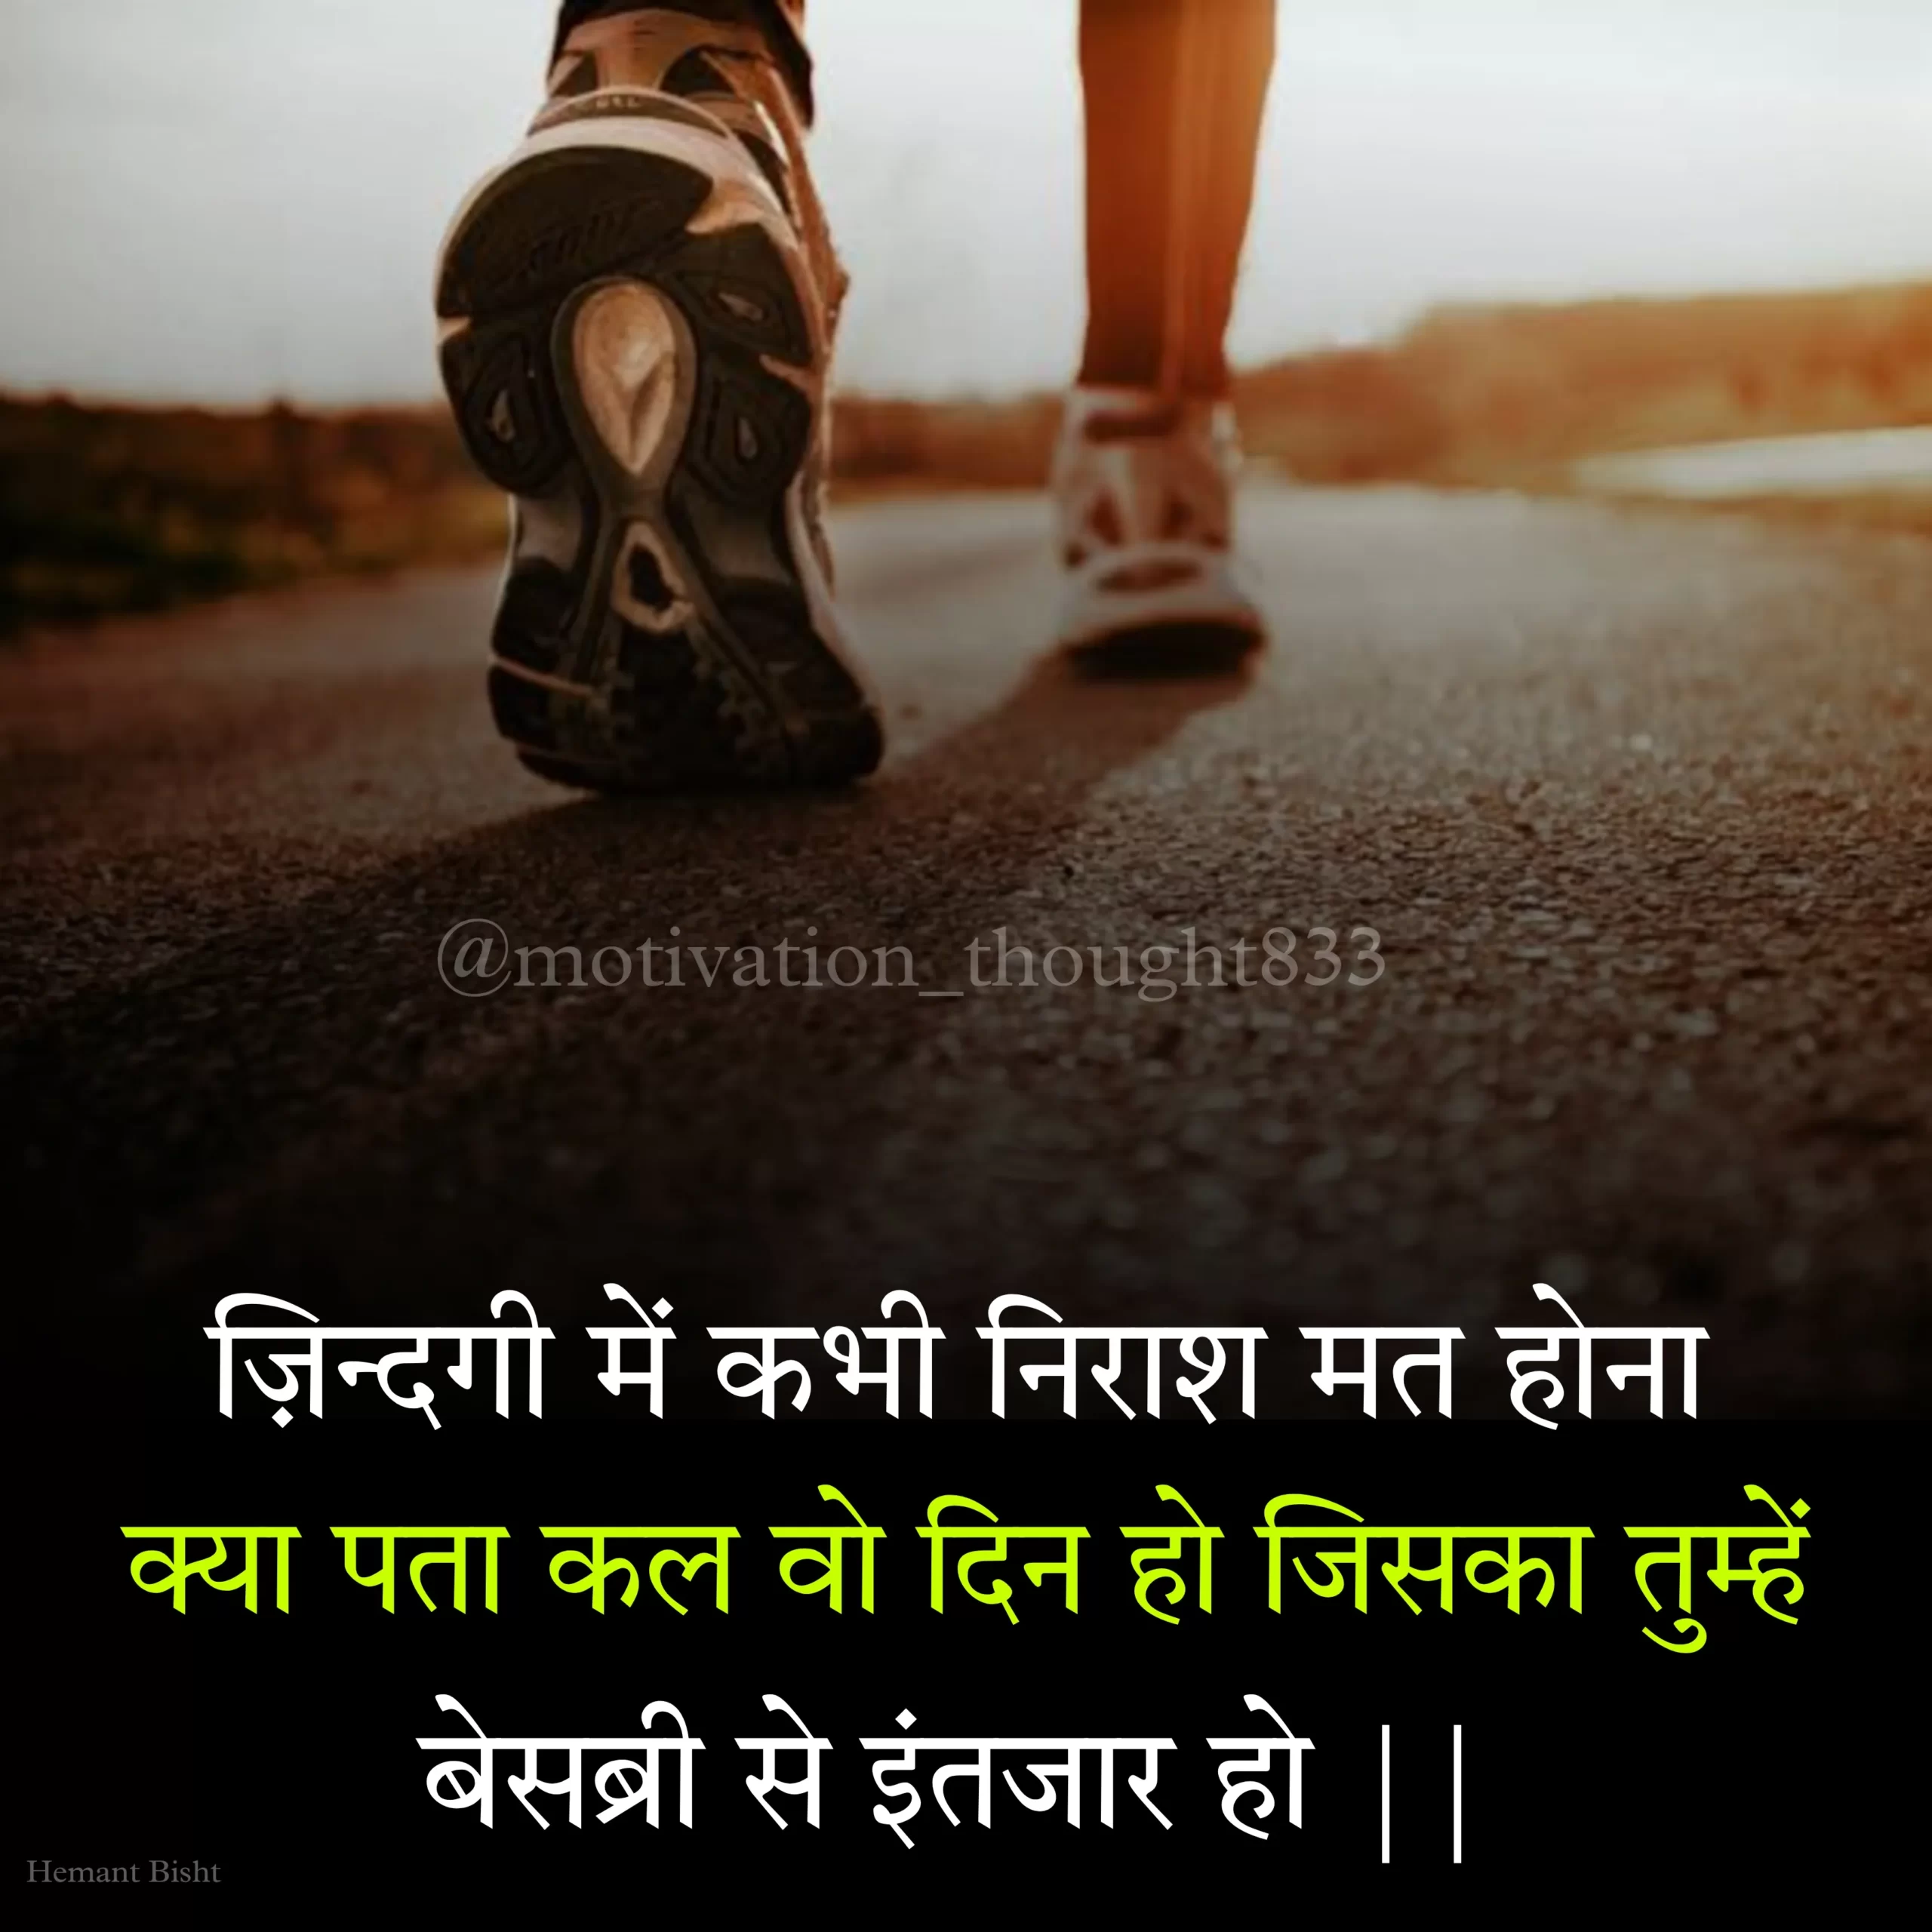 struggle motivational quotes in hindi - 56